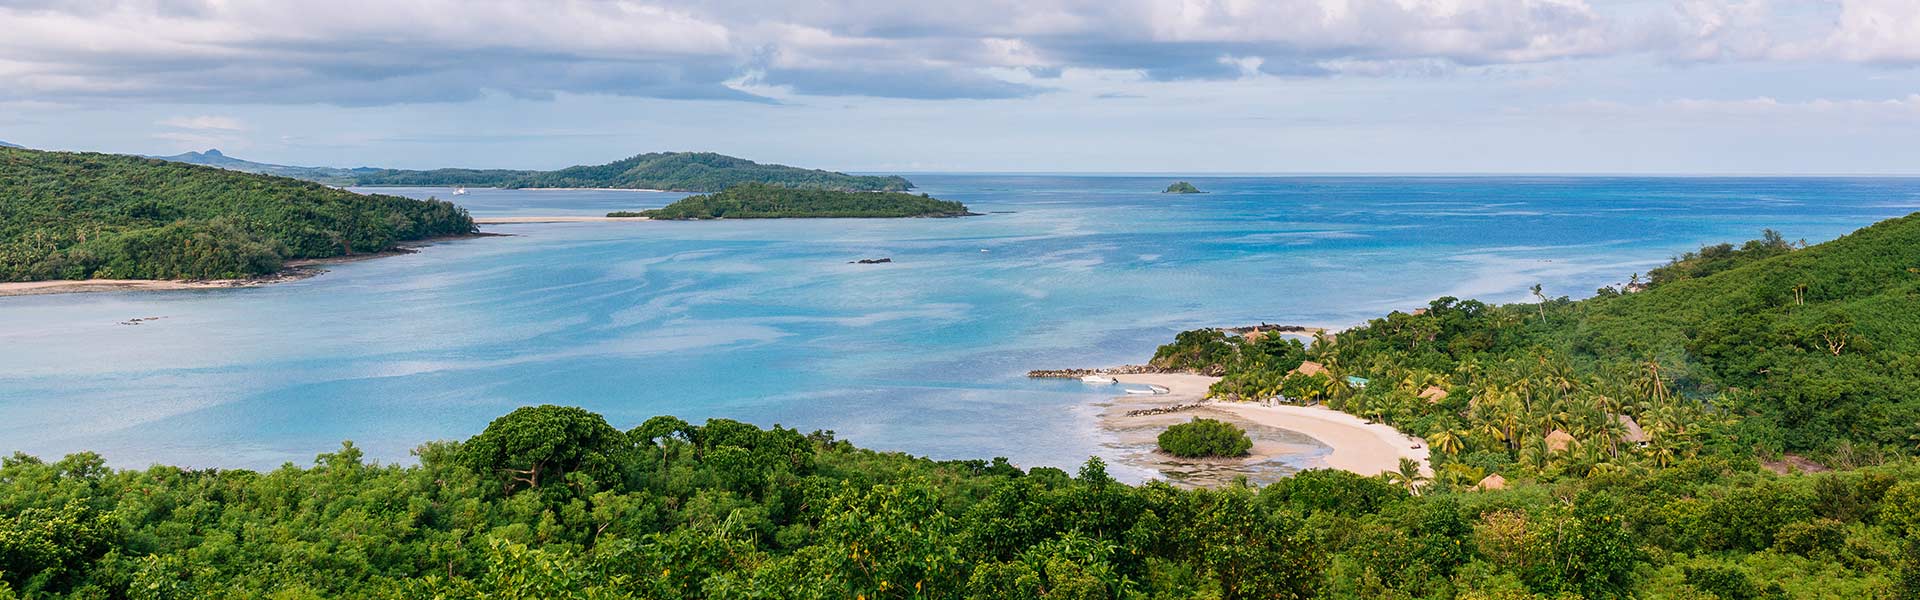 5 Nights in Yasawa Islands, Fiji: Luxe Resort, Meals & More@ $2,386 PP!